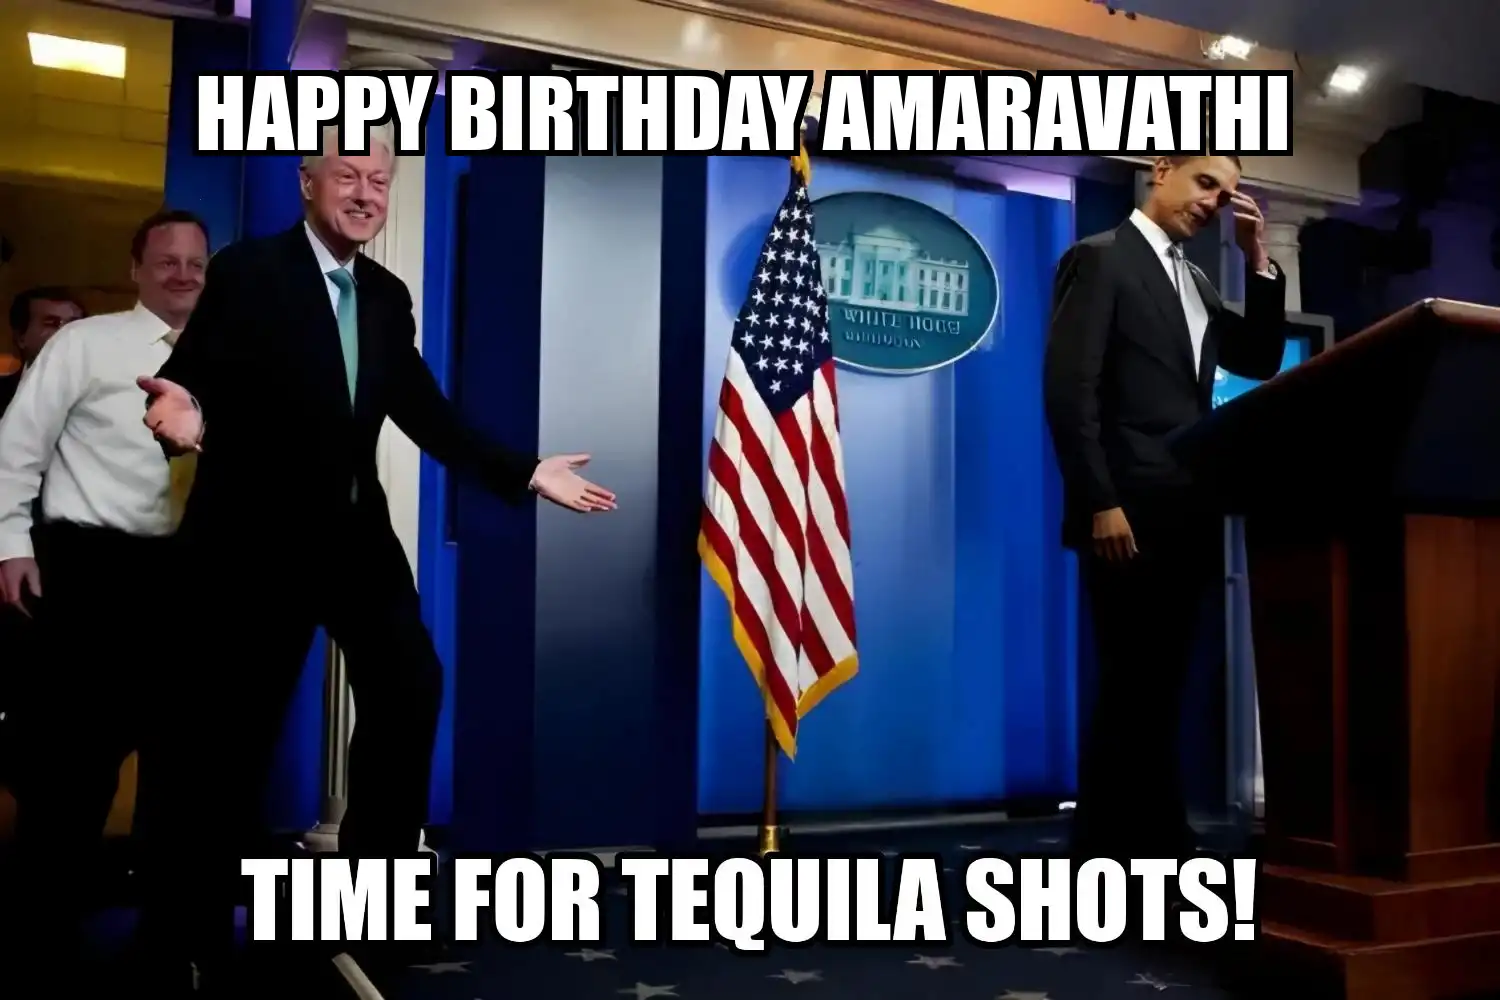 Happy Birthday Amaravathi Time For Tequila Shots Memes